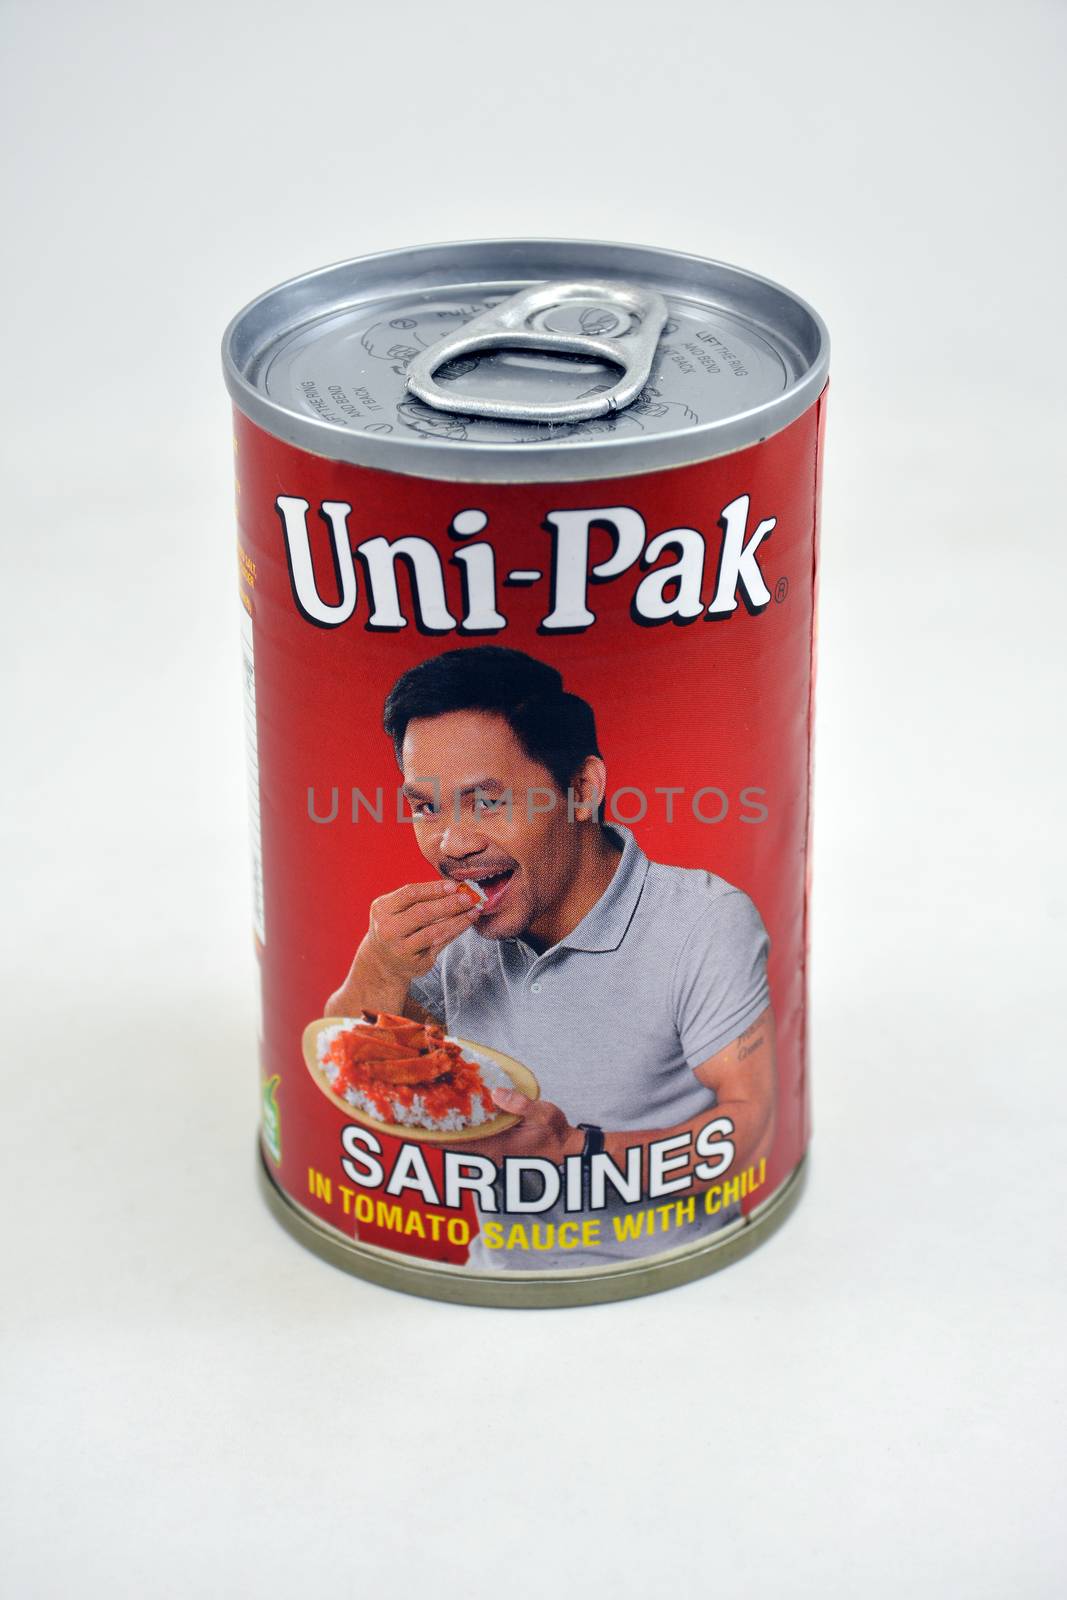 MANILA, PH - JUNE 26 - Unipak sardines can on June 26, 2020 in Manila, Philippines.